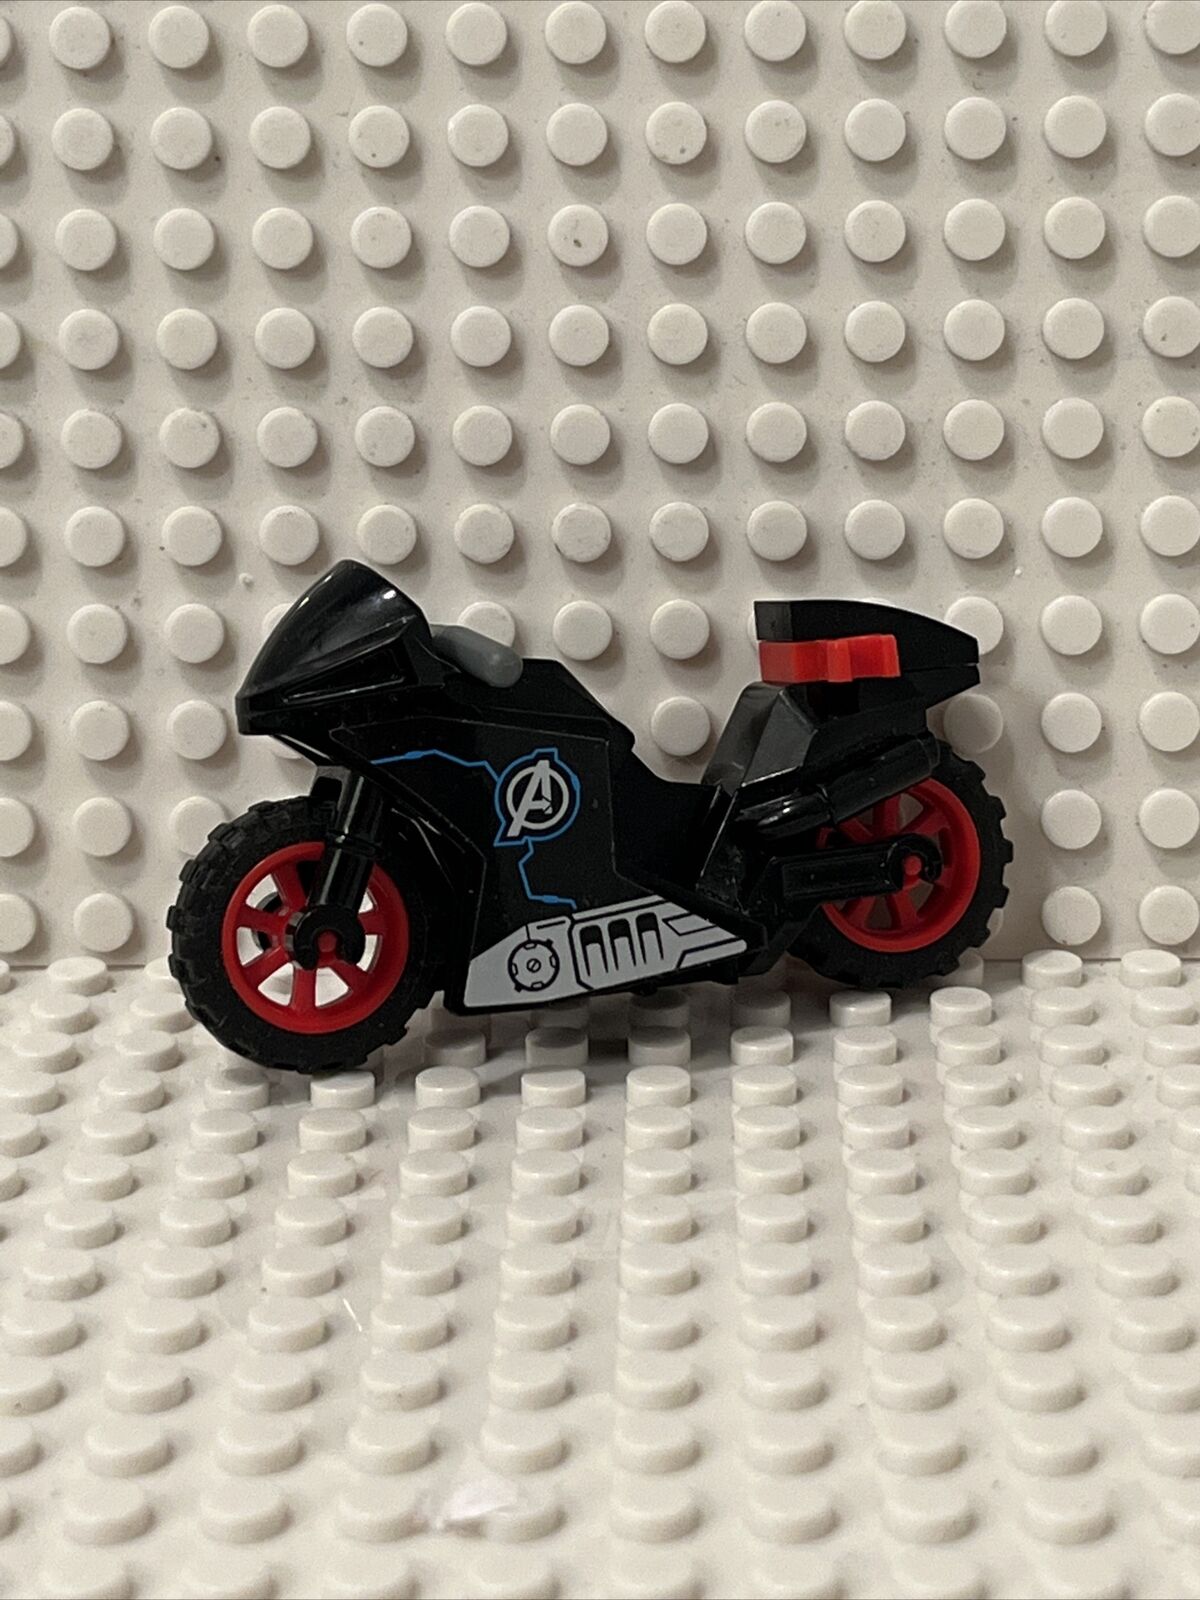 LEGO Avengers Motorcycle Minifigure Accessory Marvel Super Heroes Bike